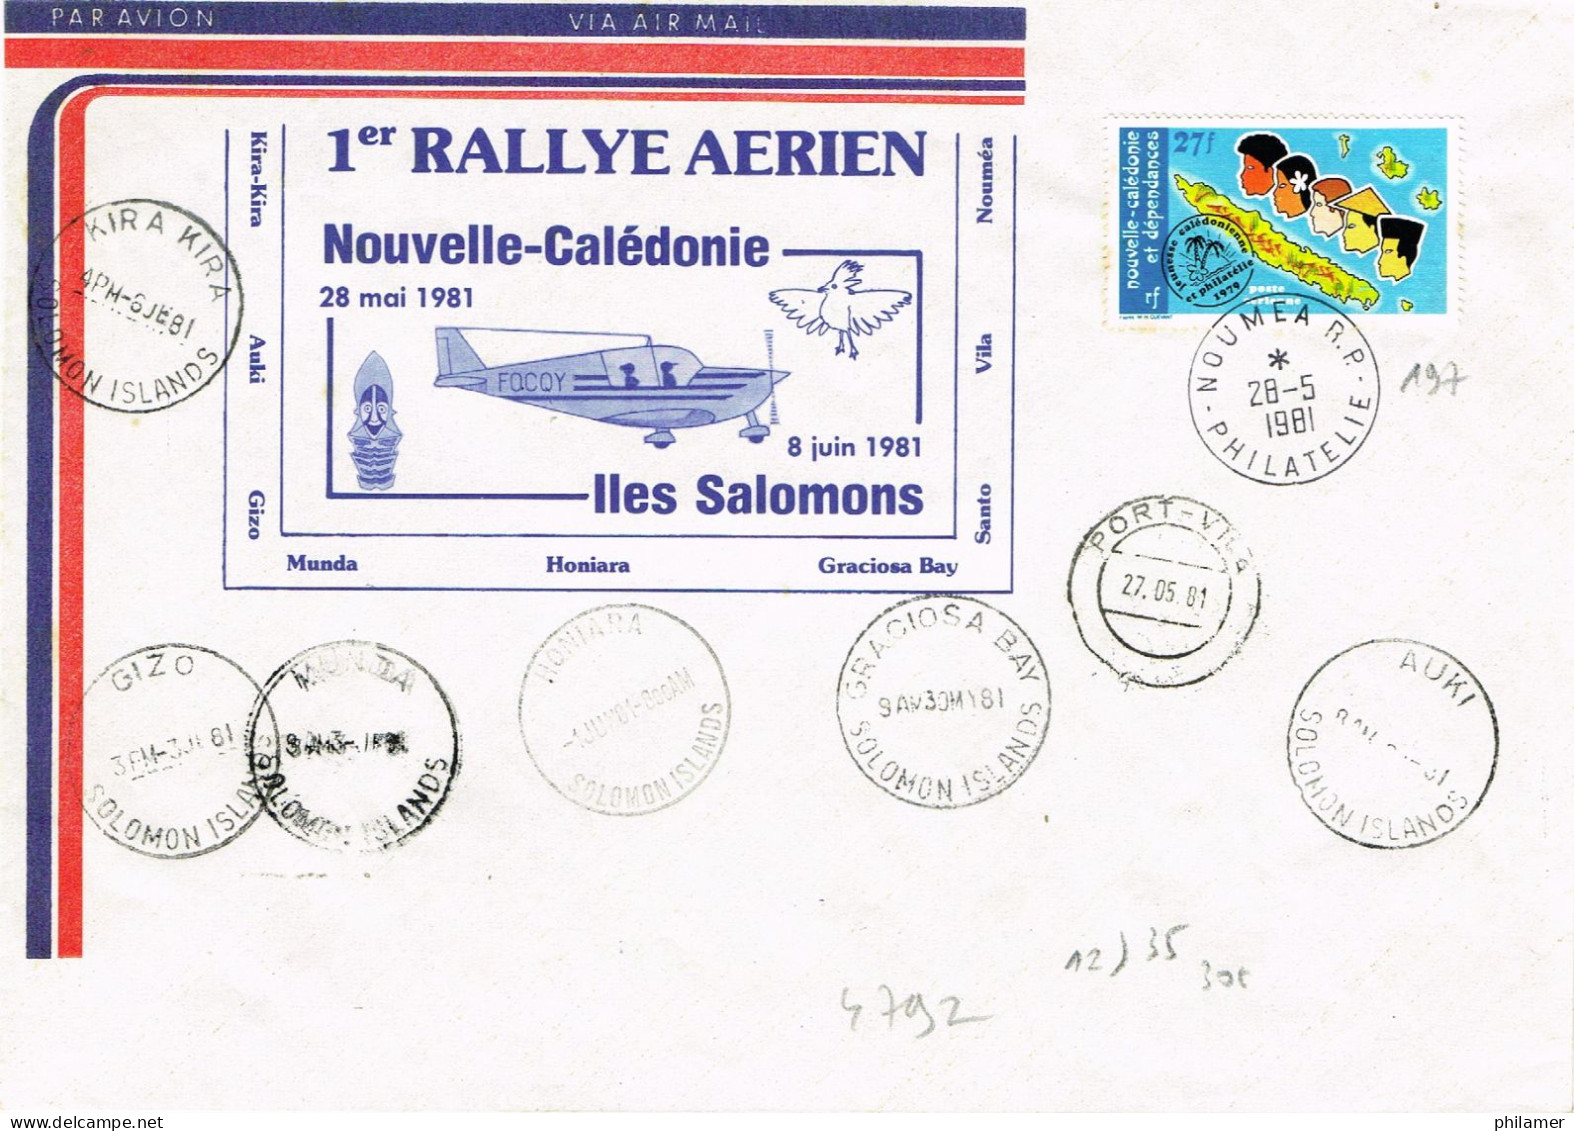 Nouvelle Caledonie Caledonie FFC Premier Vol Aerien Rally Iles Salomon 28 Mai 1981 Cad Port Vila Vanuatu BE - Covers & Documents